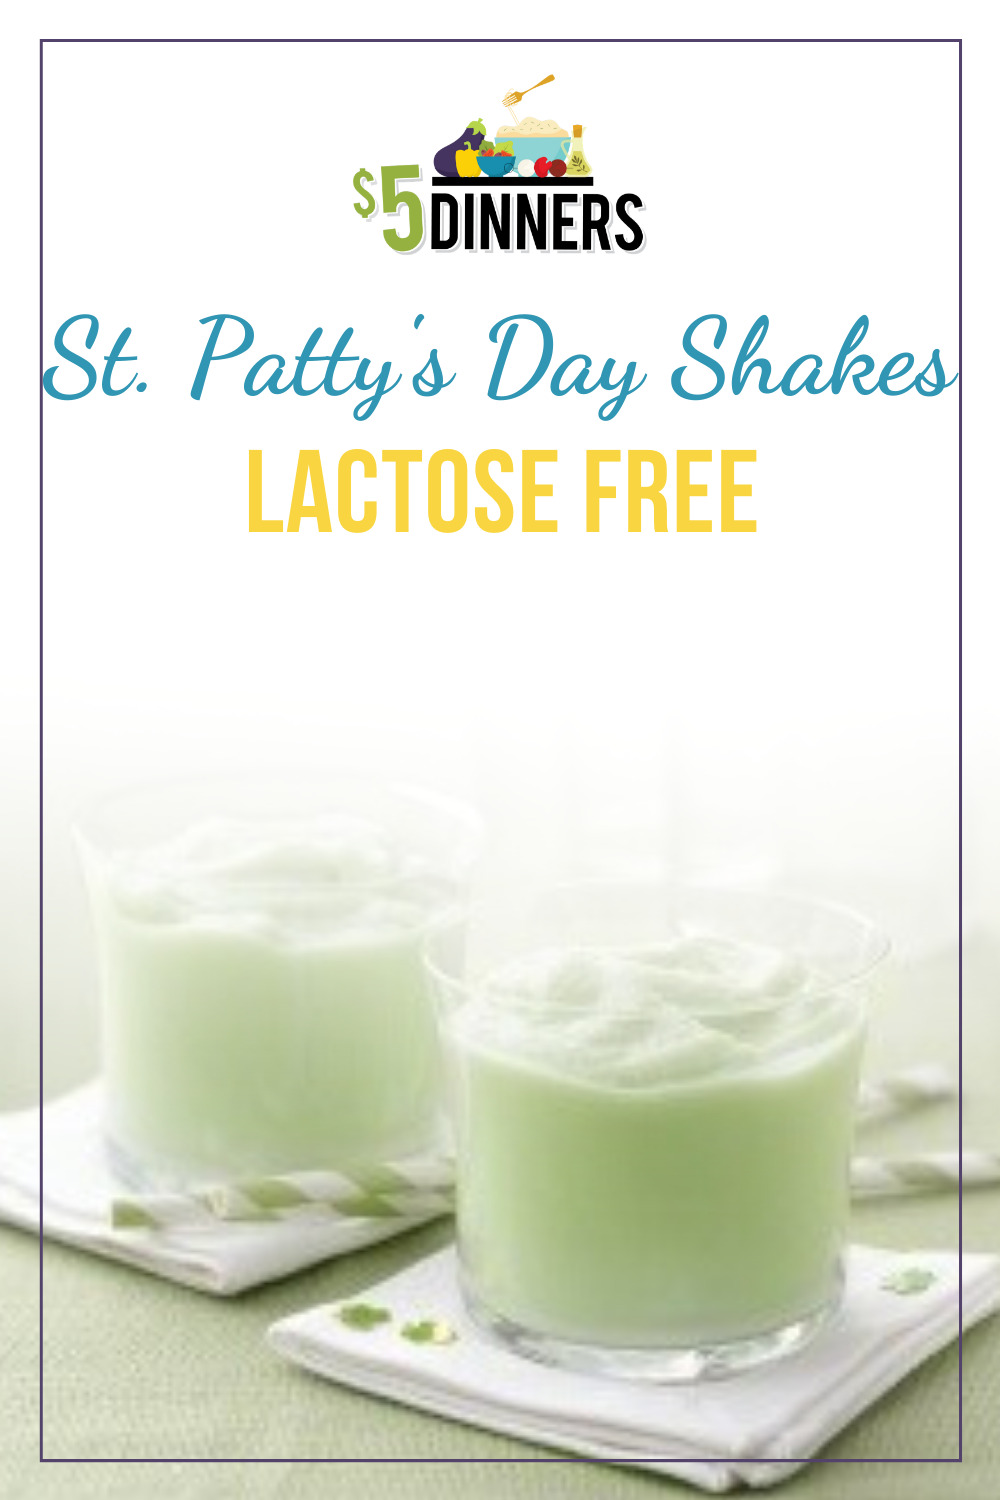 st patrick's day lactose free shake recipe